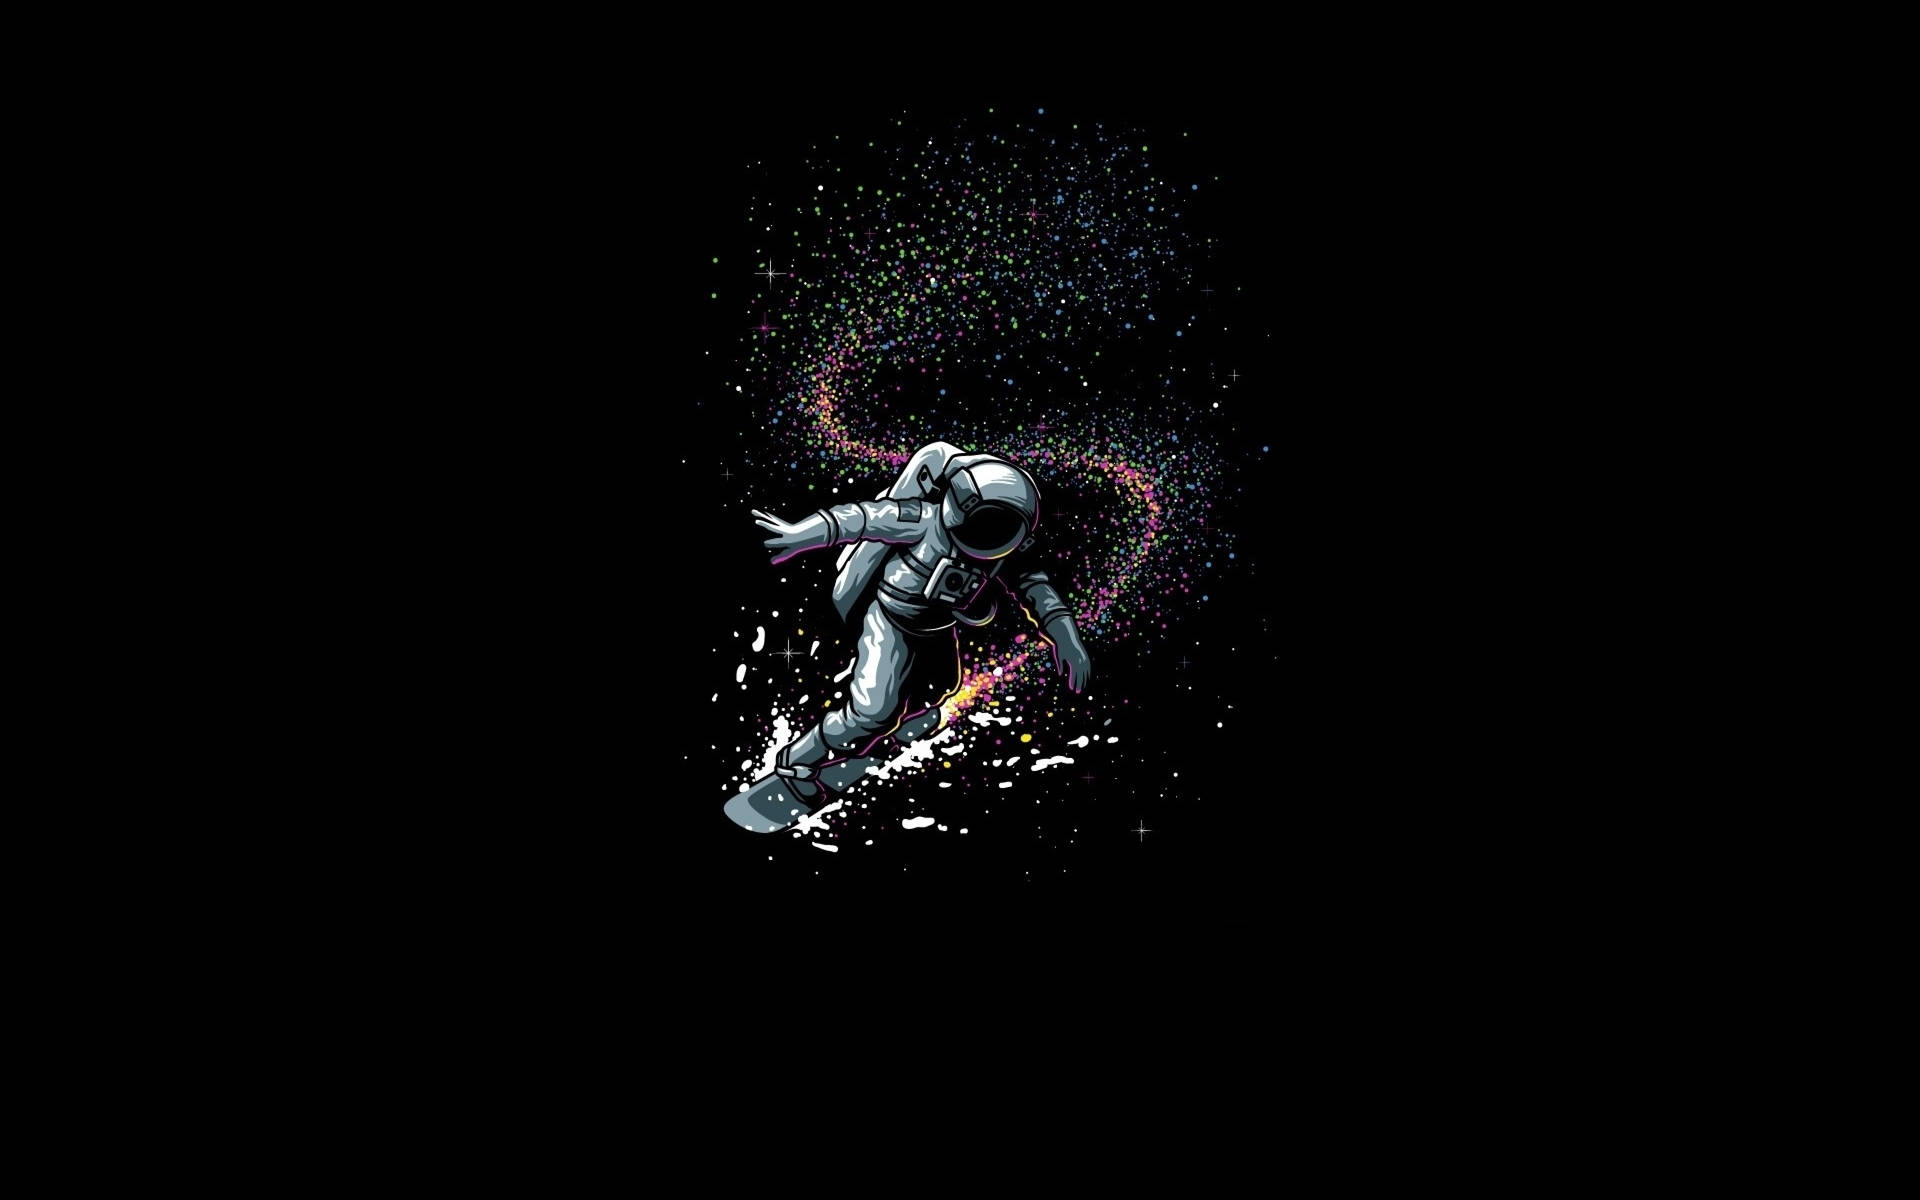 Astronaut Comet Surfing Graphic Art Background